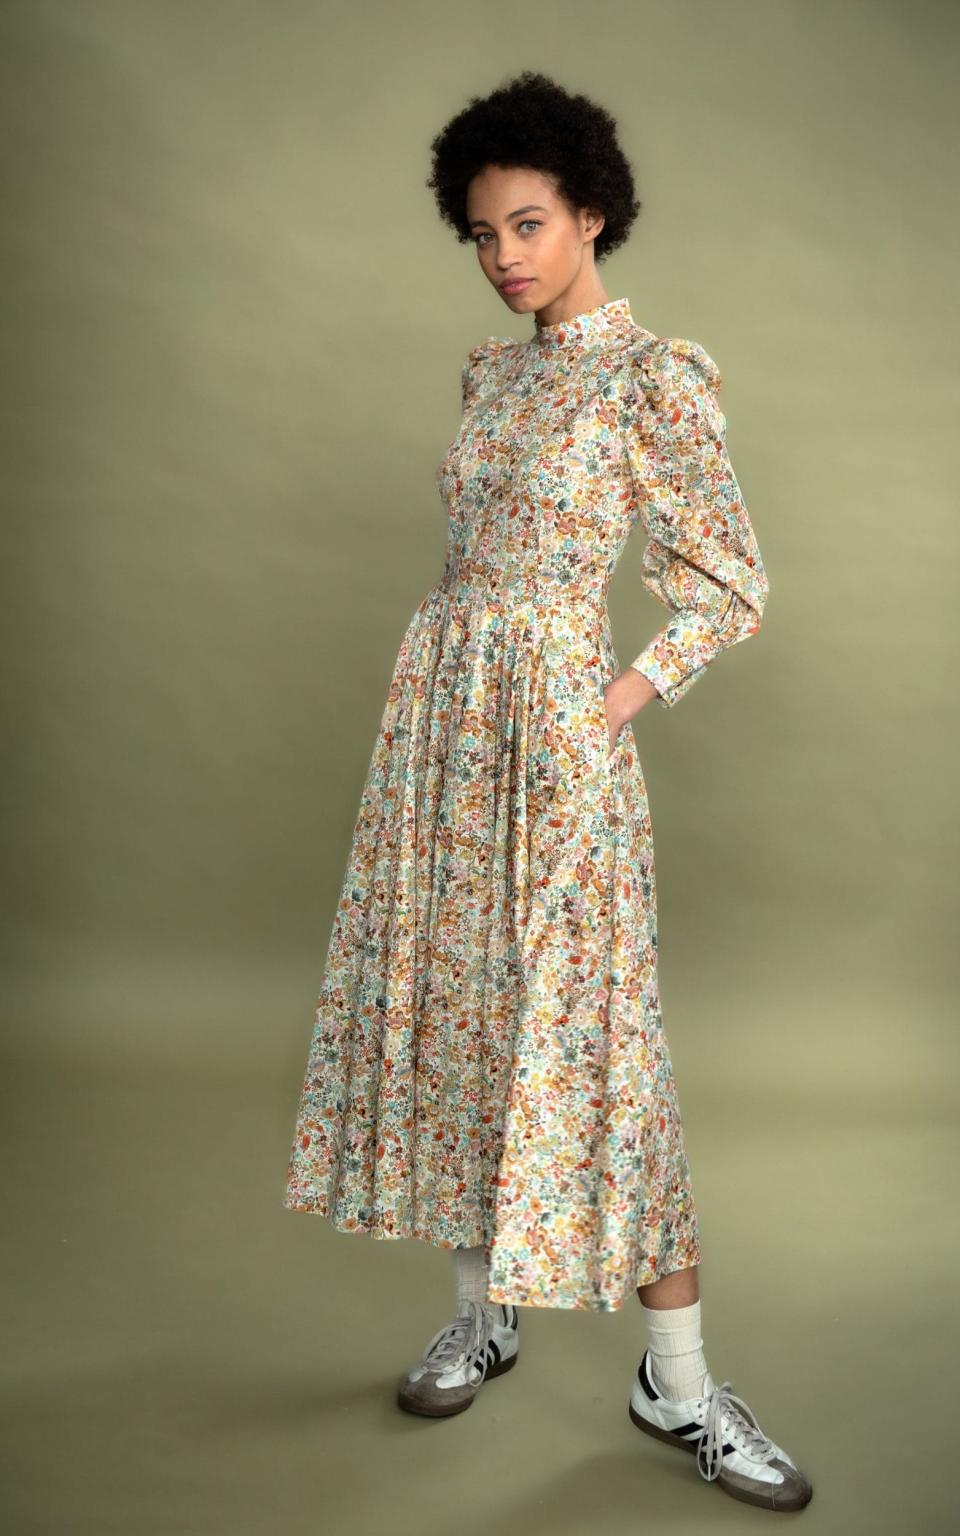 'Grace' dress, £430, O Pioneers